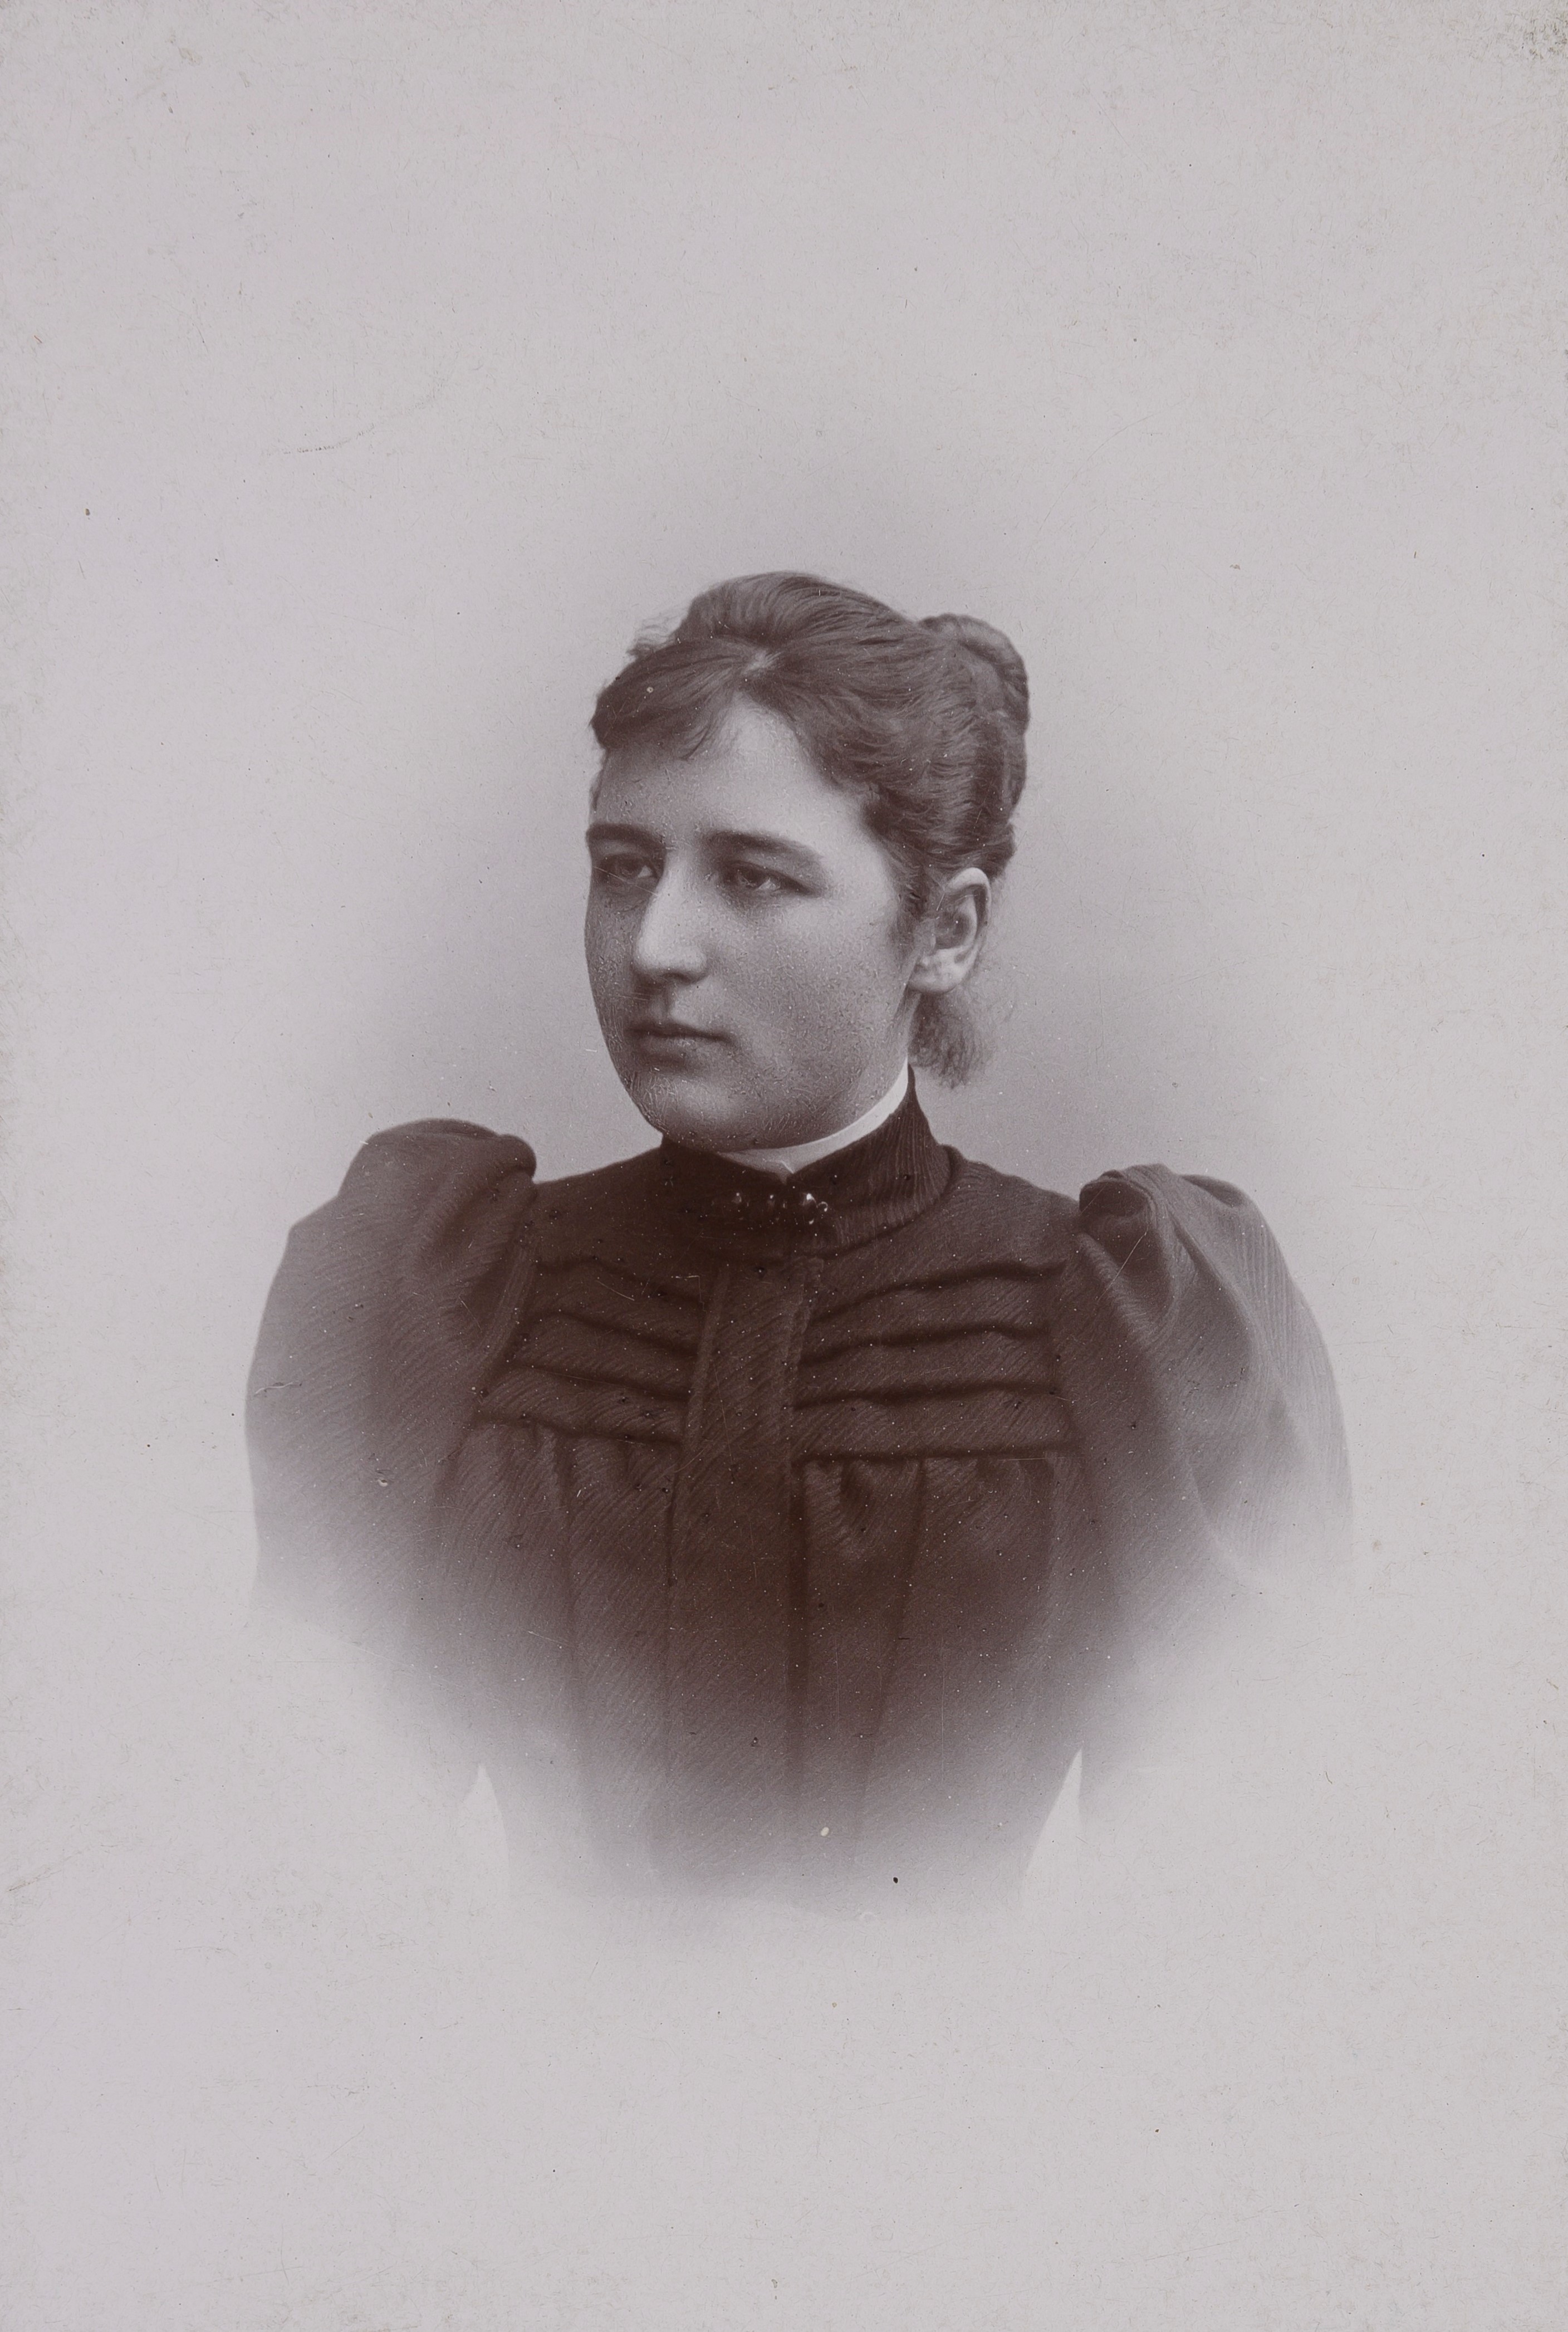 Hanna Christer-Nilsson, circa 1890s. Photo: Lina Jonn (1861-1896). Lund University Library